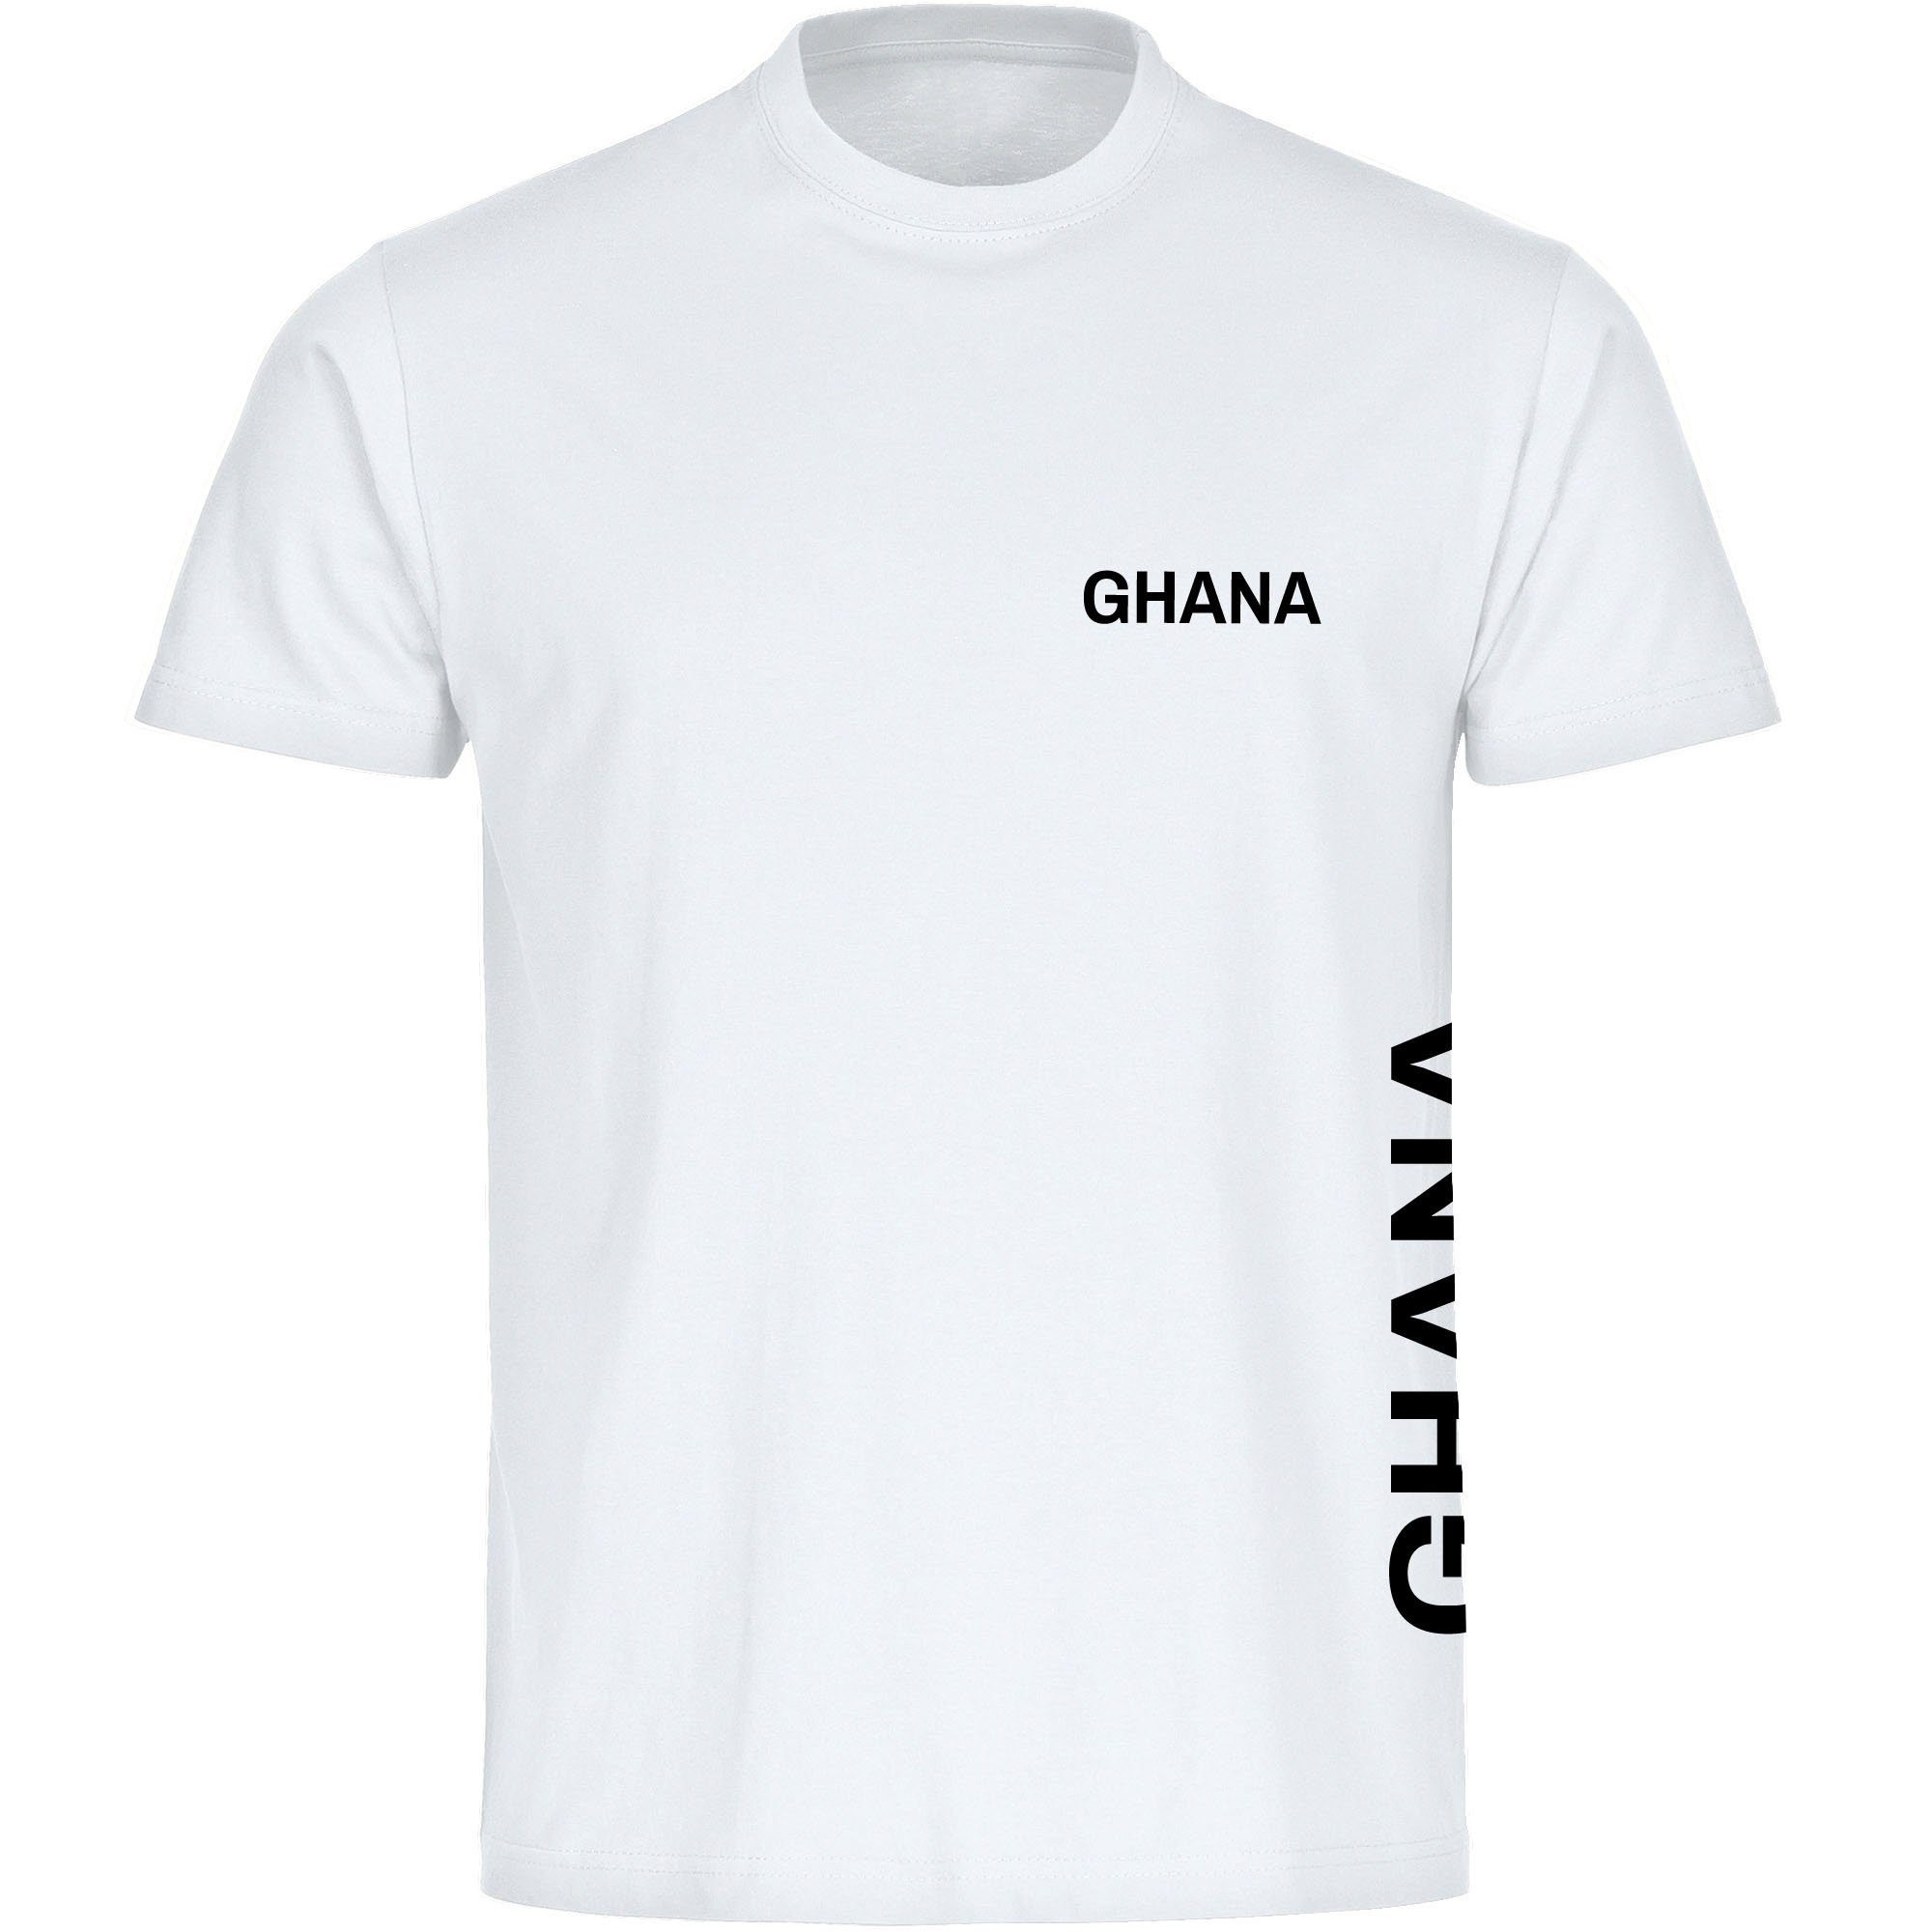 multifanshop T-Shirt Kinder Ghana - Brust & Seite - Boy Girl